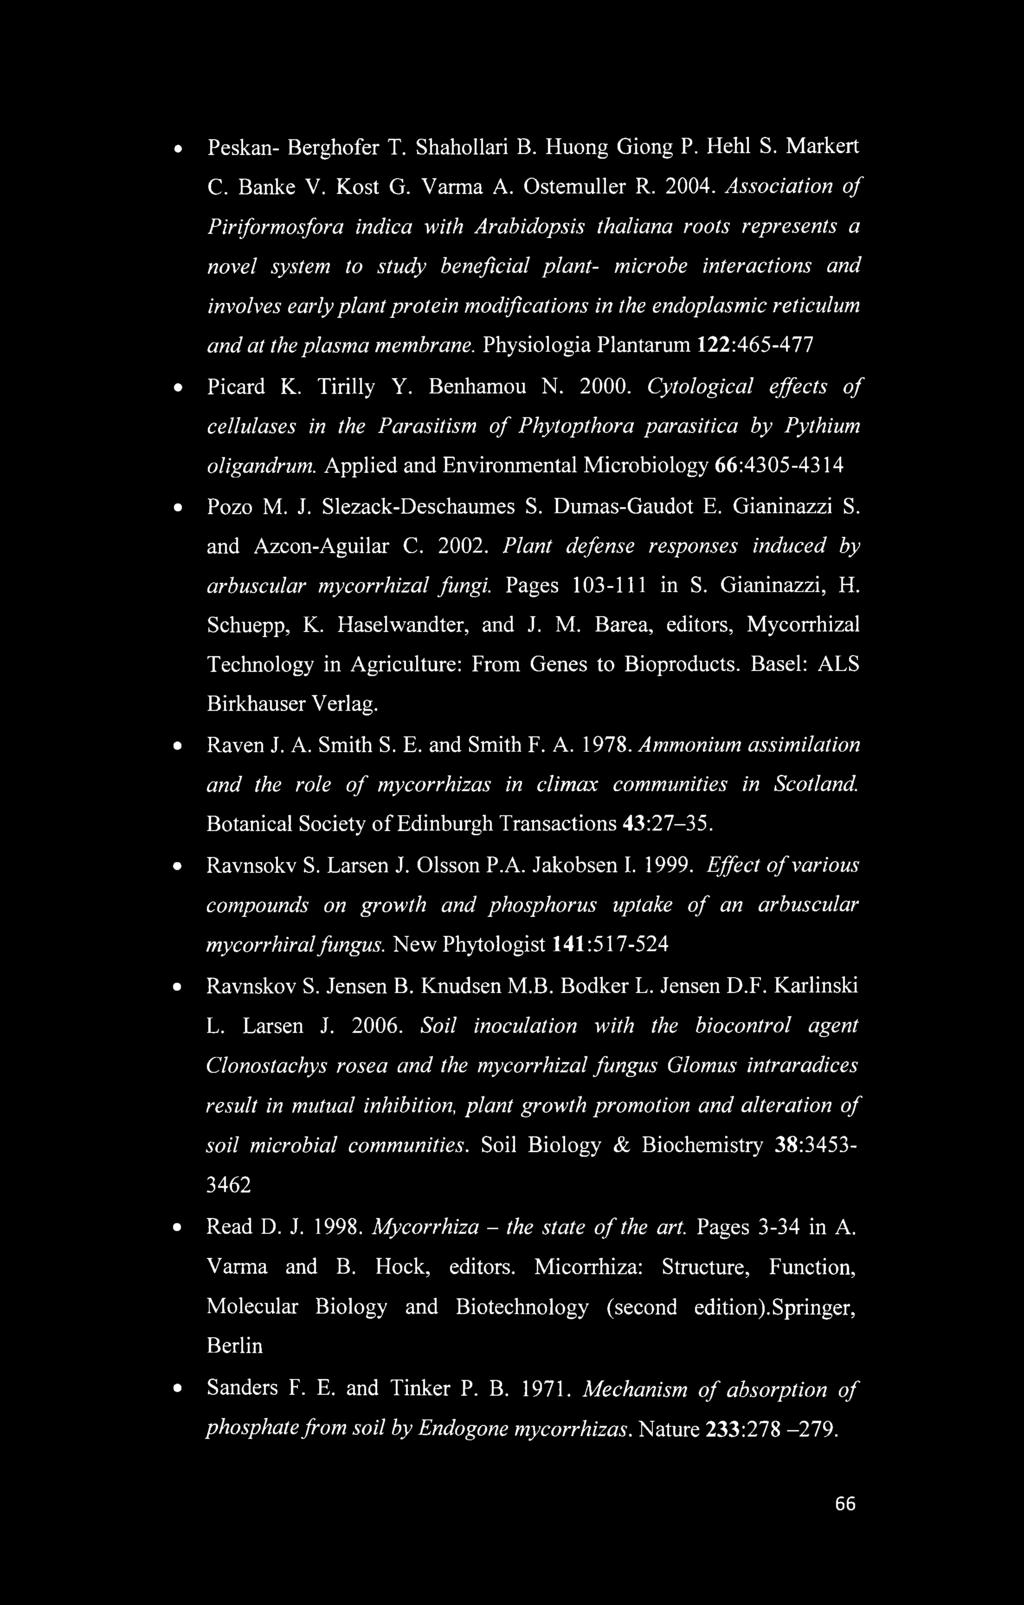 endoplasmic reticulum and at the plasma membrane. Physiologia Plantarum 122:465-477 Picard K. Tirilly Y. Benhamou N. 2000.